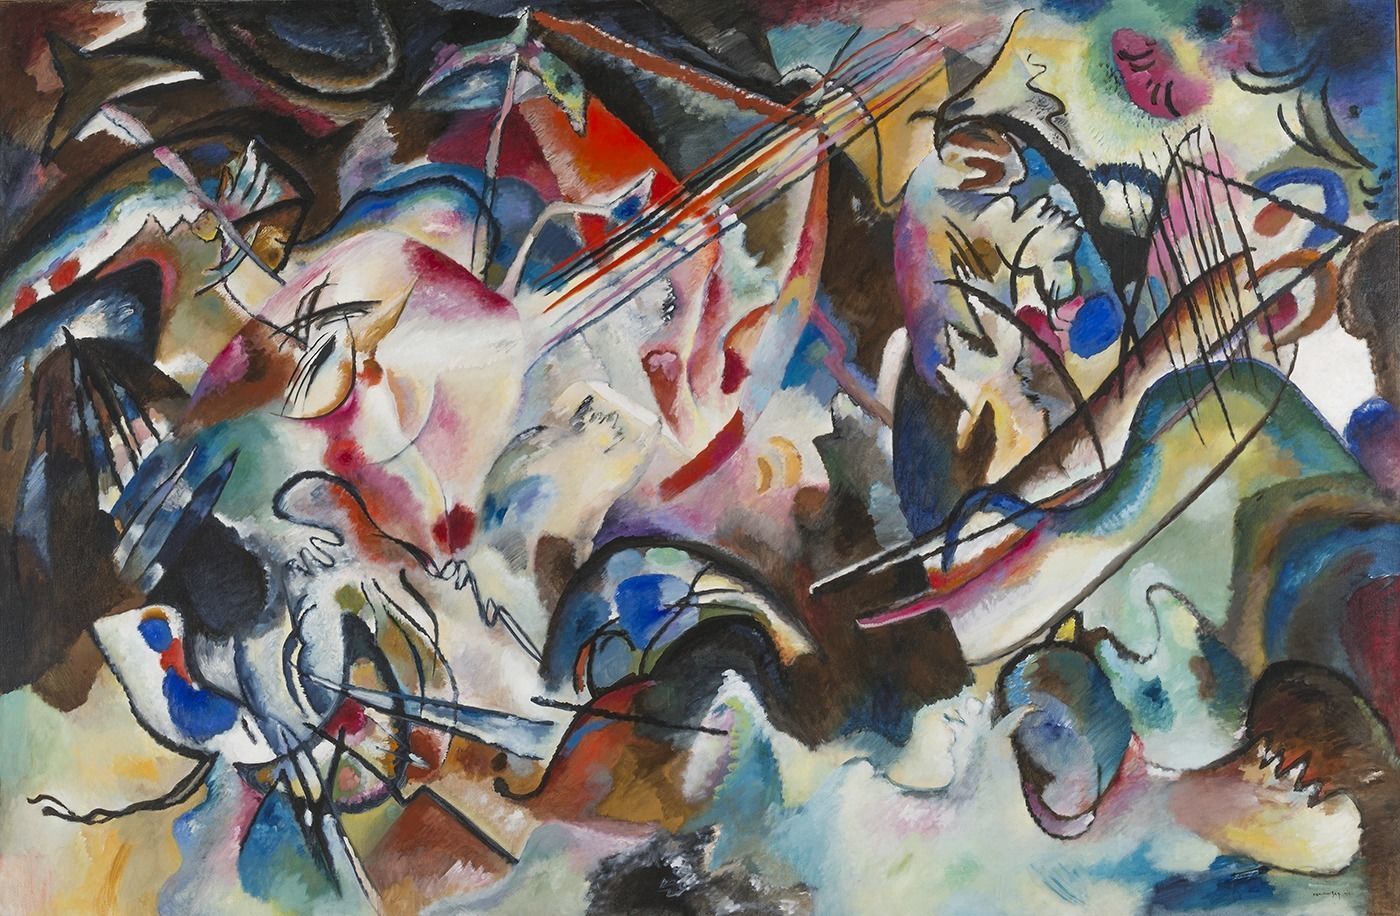 Vasiliy Kandinsky. Composition VI. 1913Oil on canvas. 195 x 300. The State Hermitage